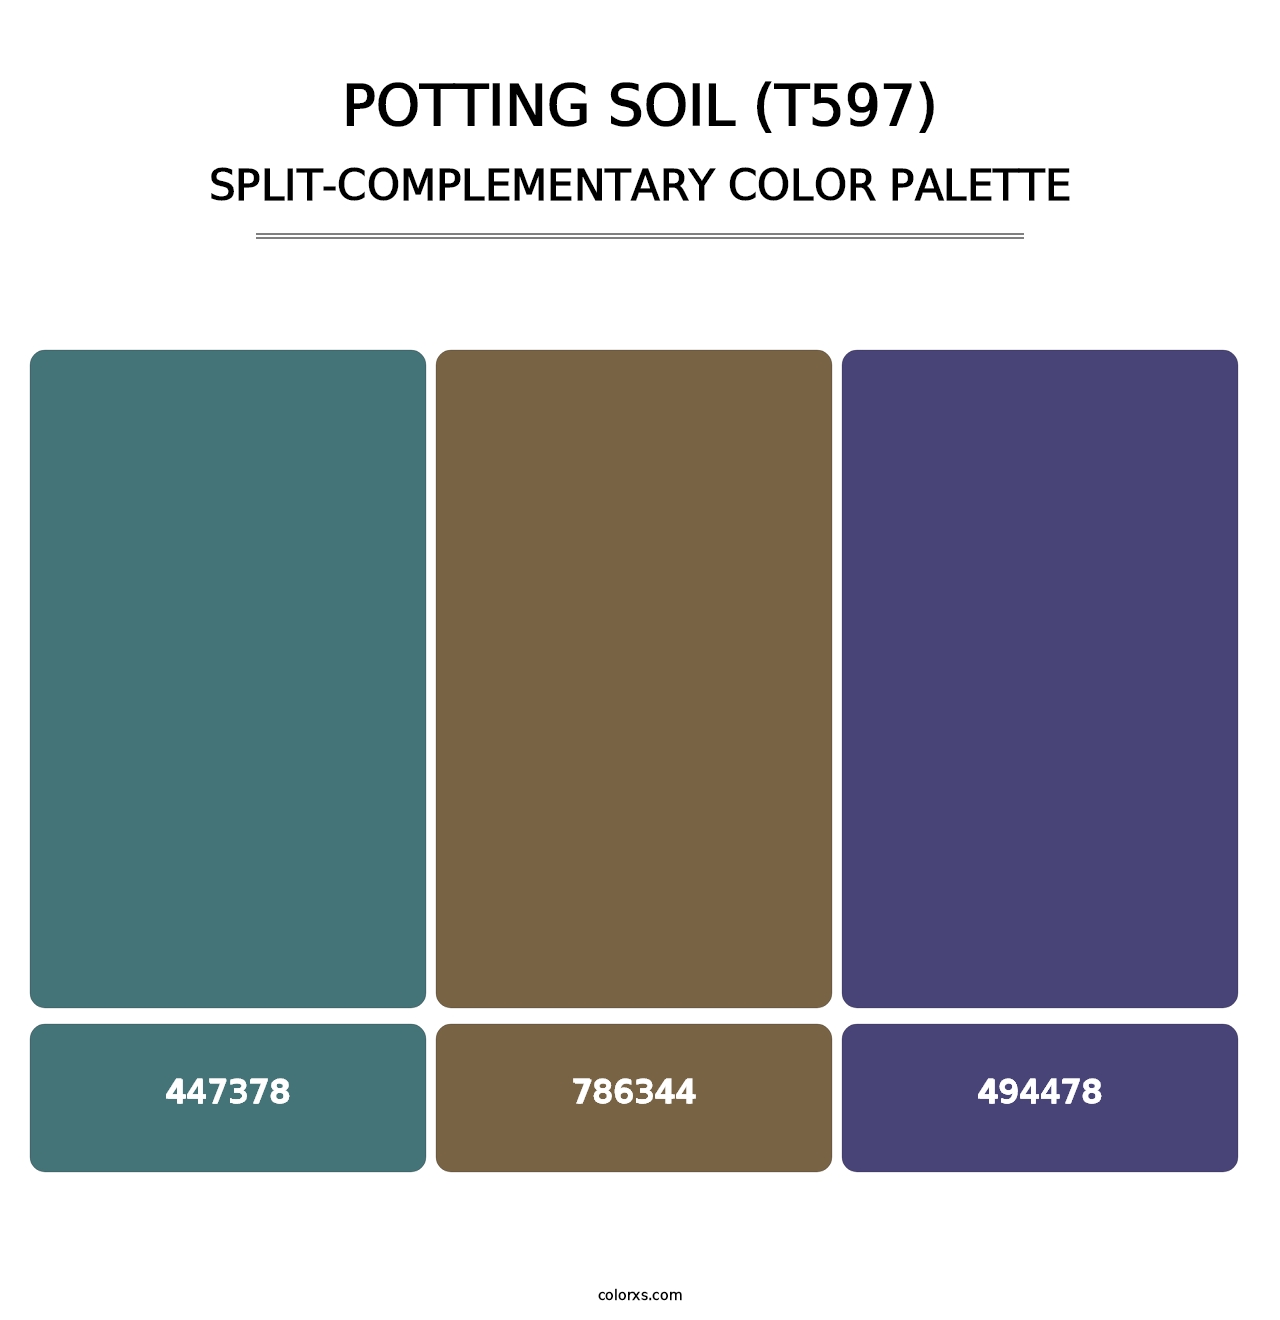 Potting Soil (T597) - Split-Complementary Color Palette